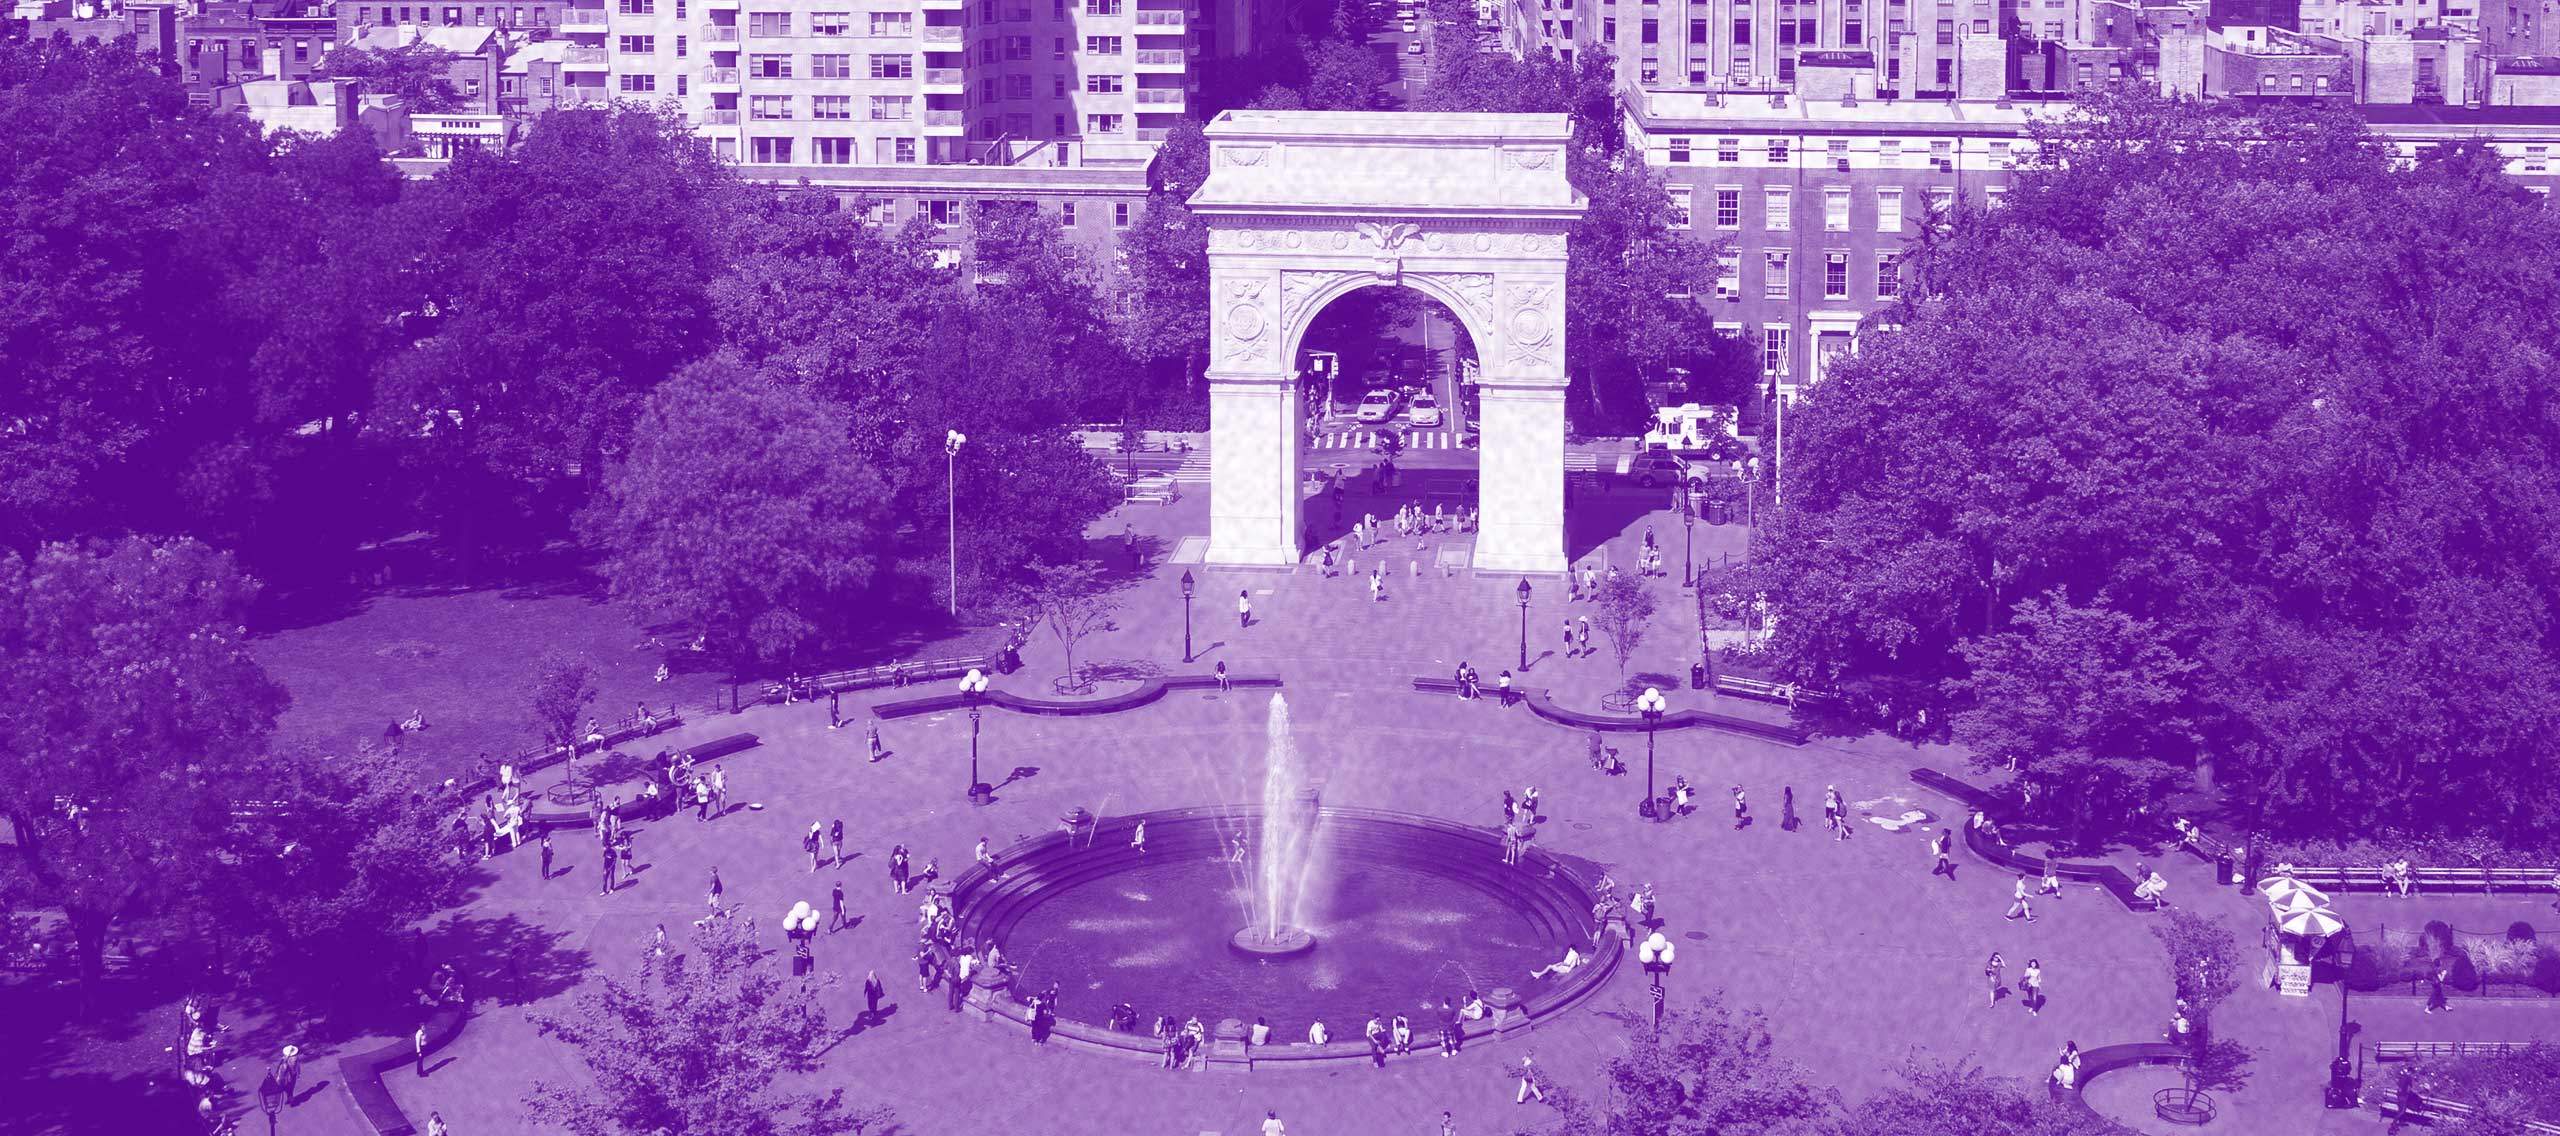 Birdʼs-eye view of Washington Square Park.